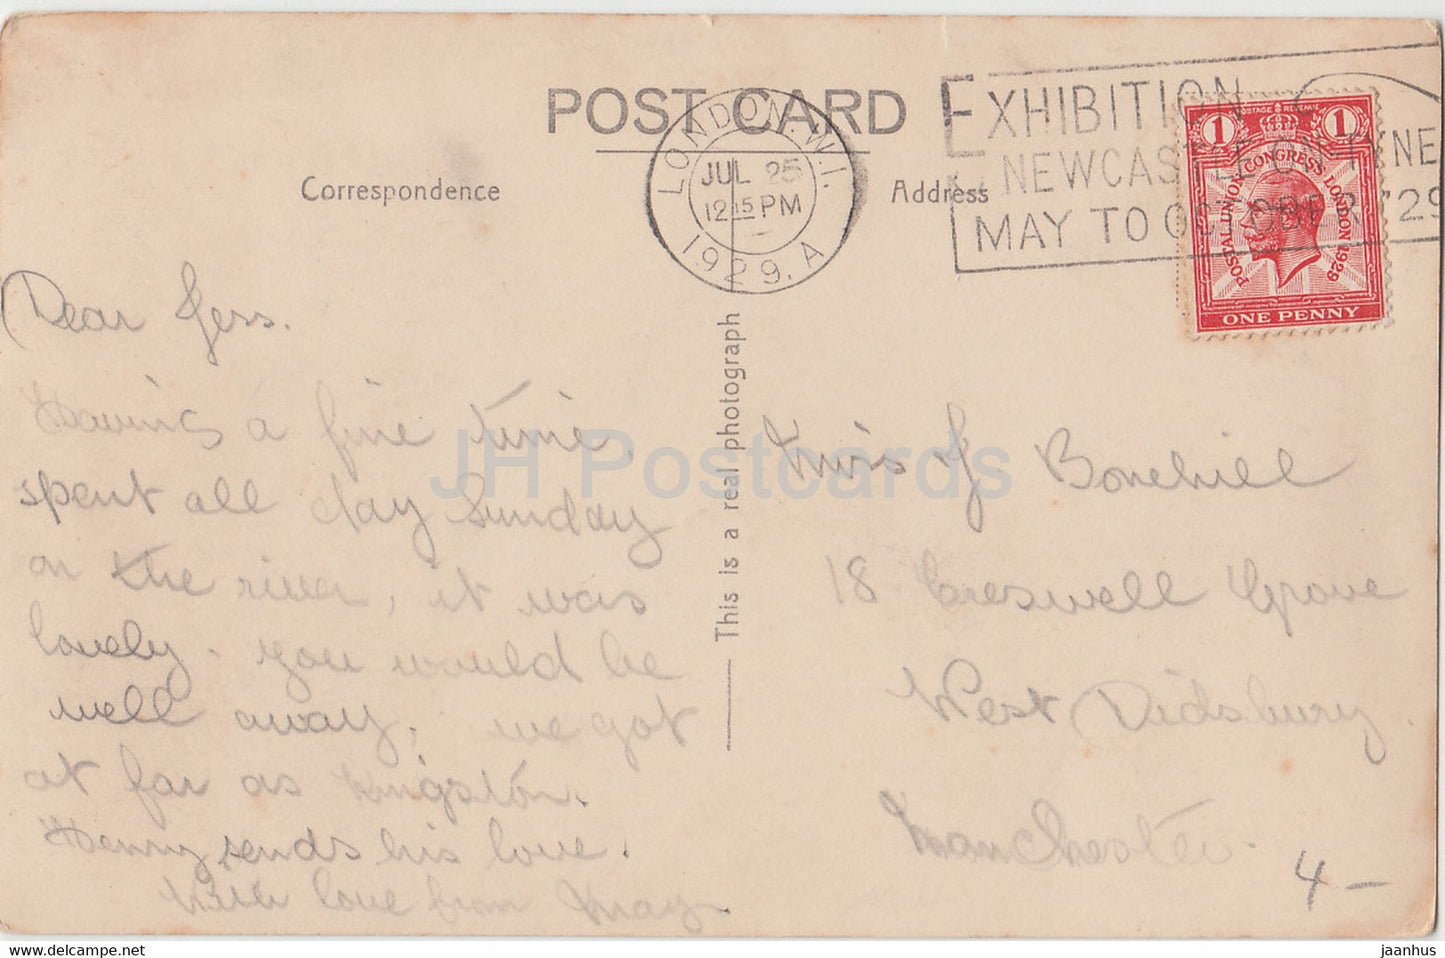 Londres - The Embankment &amp; Hotels Cecil &amp; Savoy - tram - 24297 - carte postale ancienne - 1929 - Angleterre - Royaume-Uni - utilisé